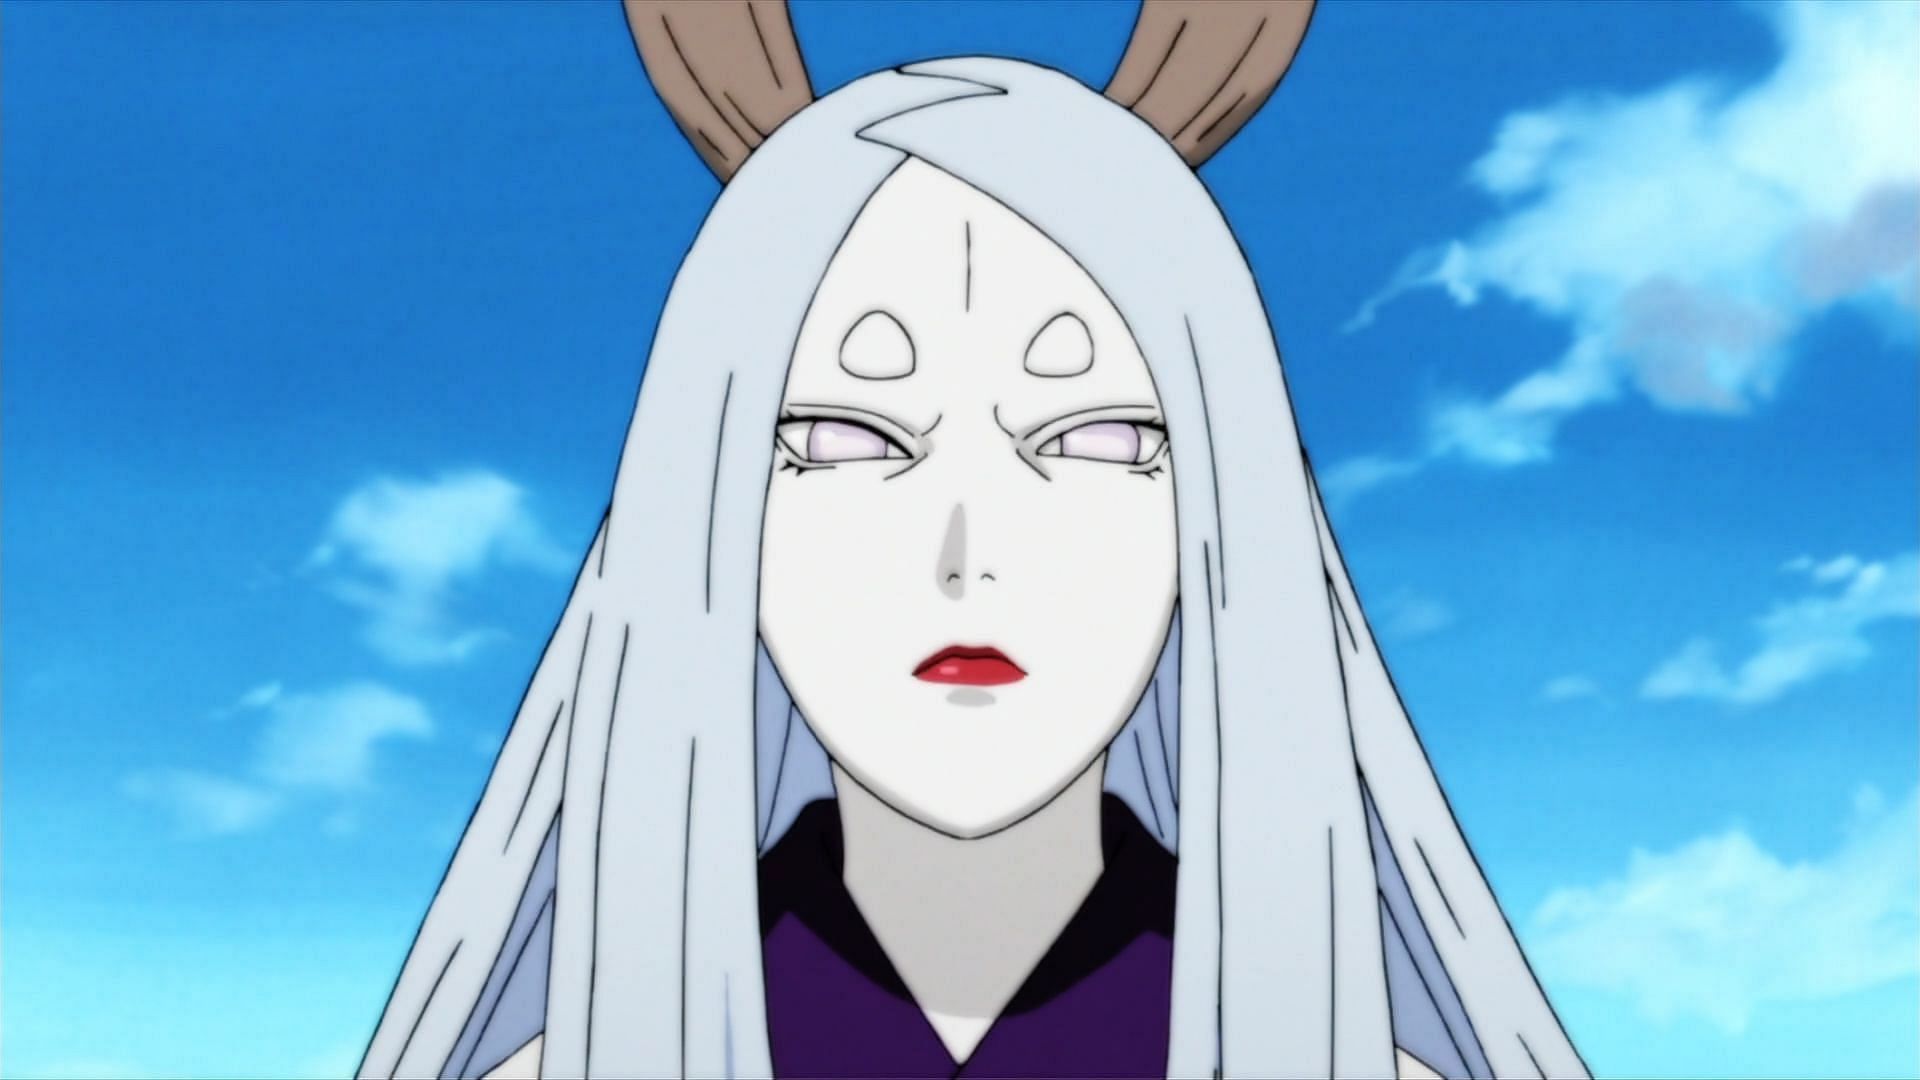 Kaguya Otsutsuki as she appears in the series (Image via Pierrot)